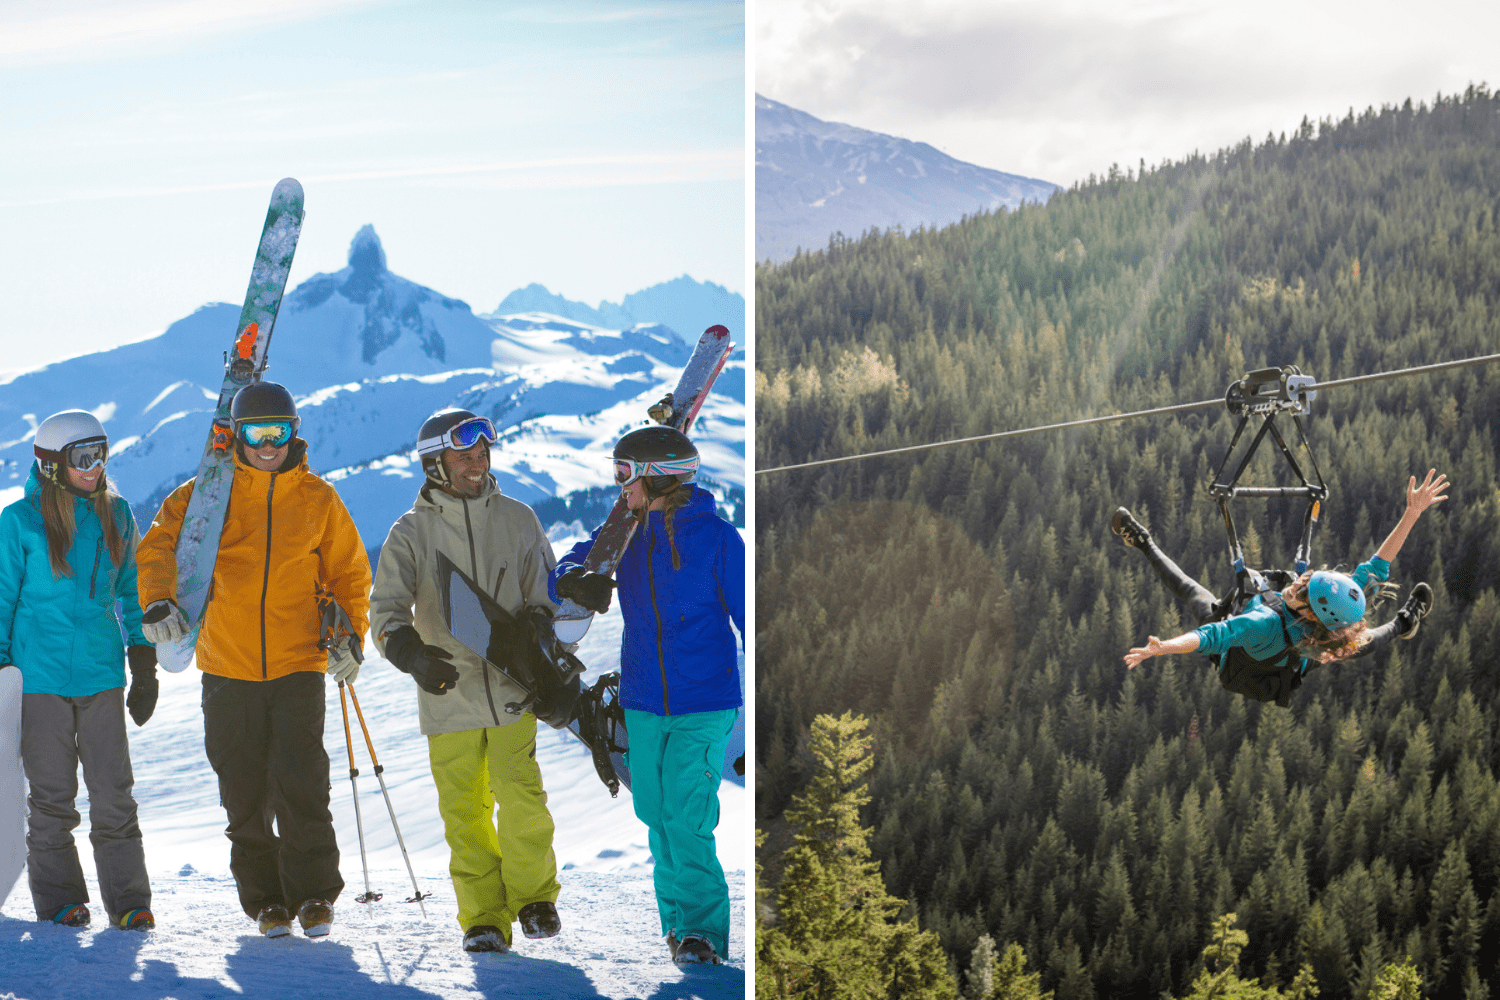 Skiing at Whistler Blackcomb (Left), Ziplining in Whistler (Right)